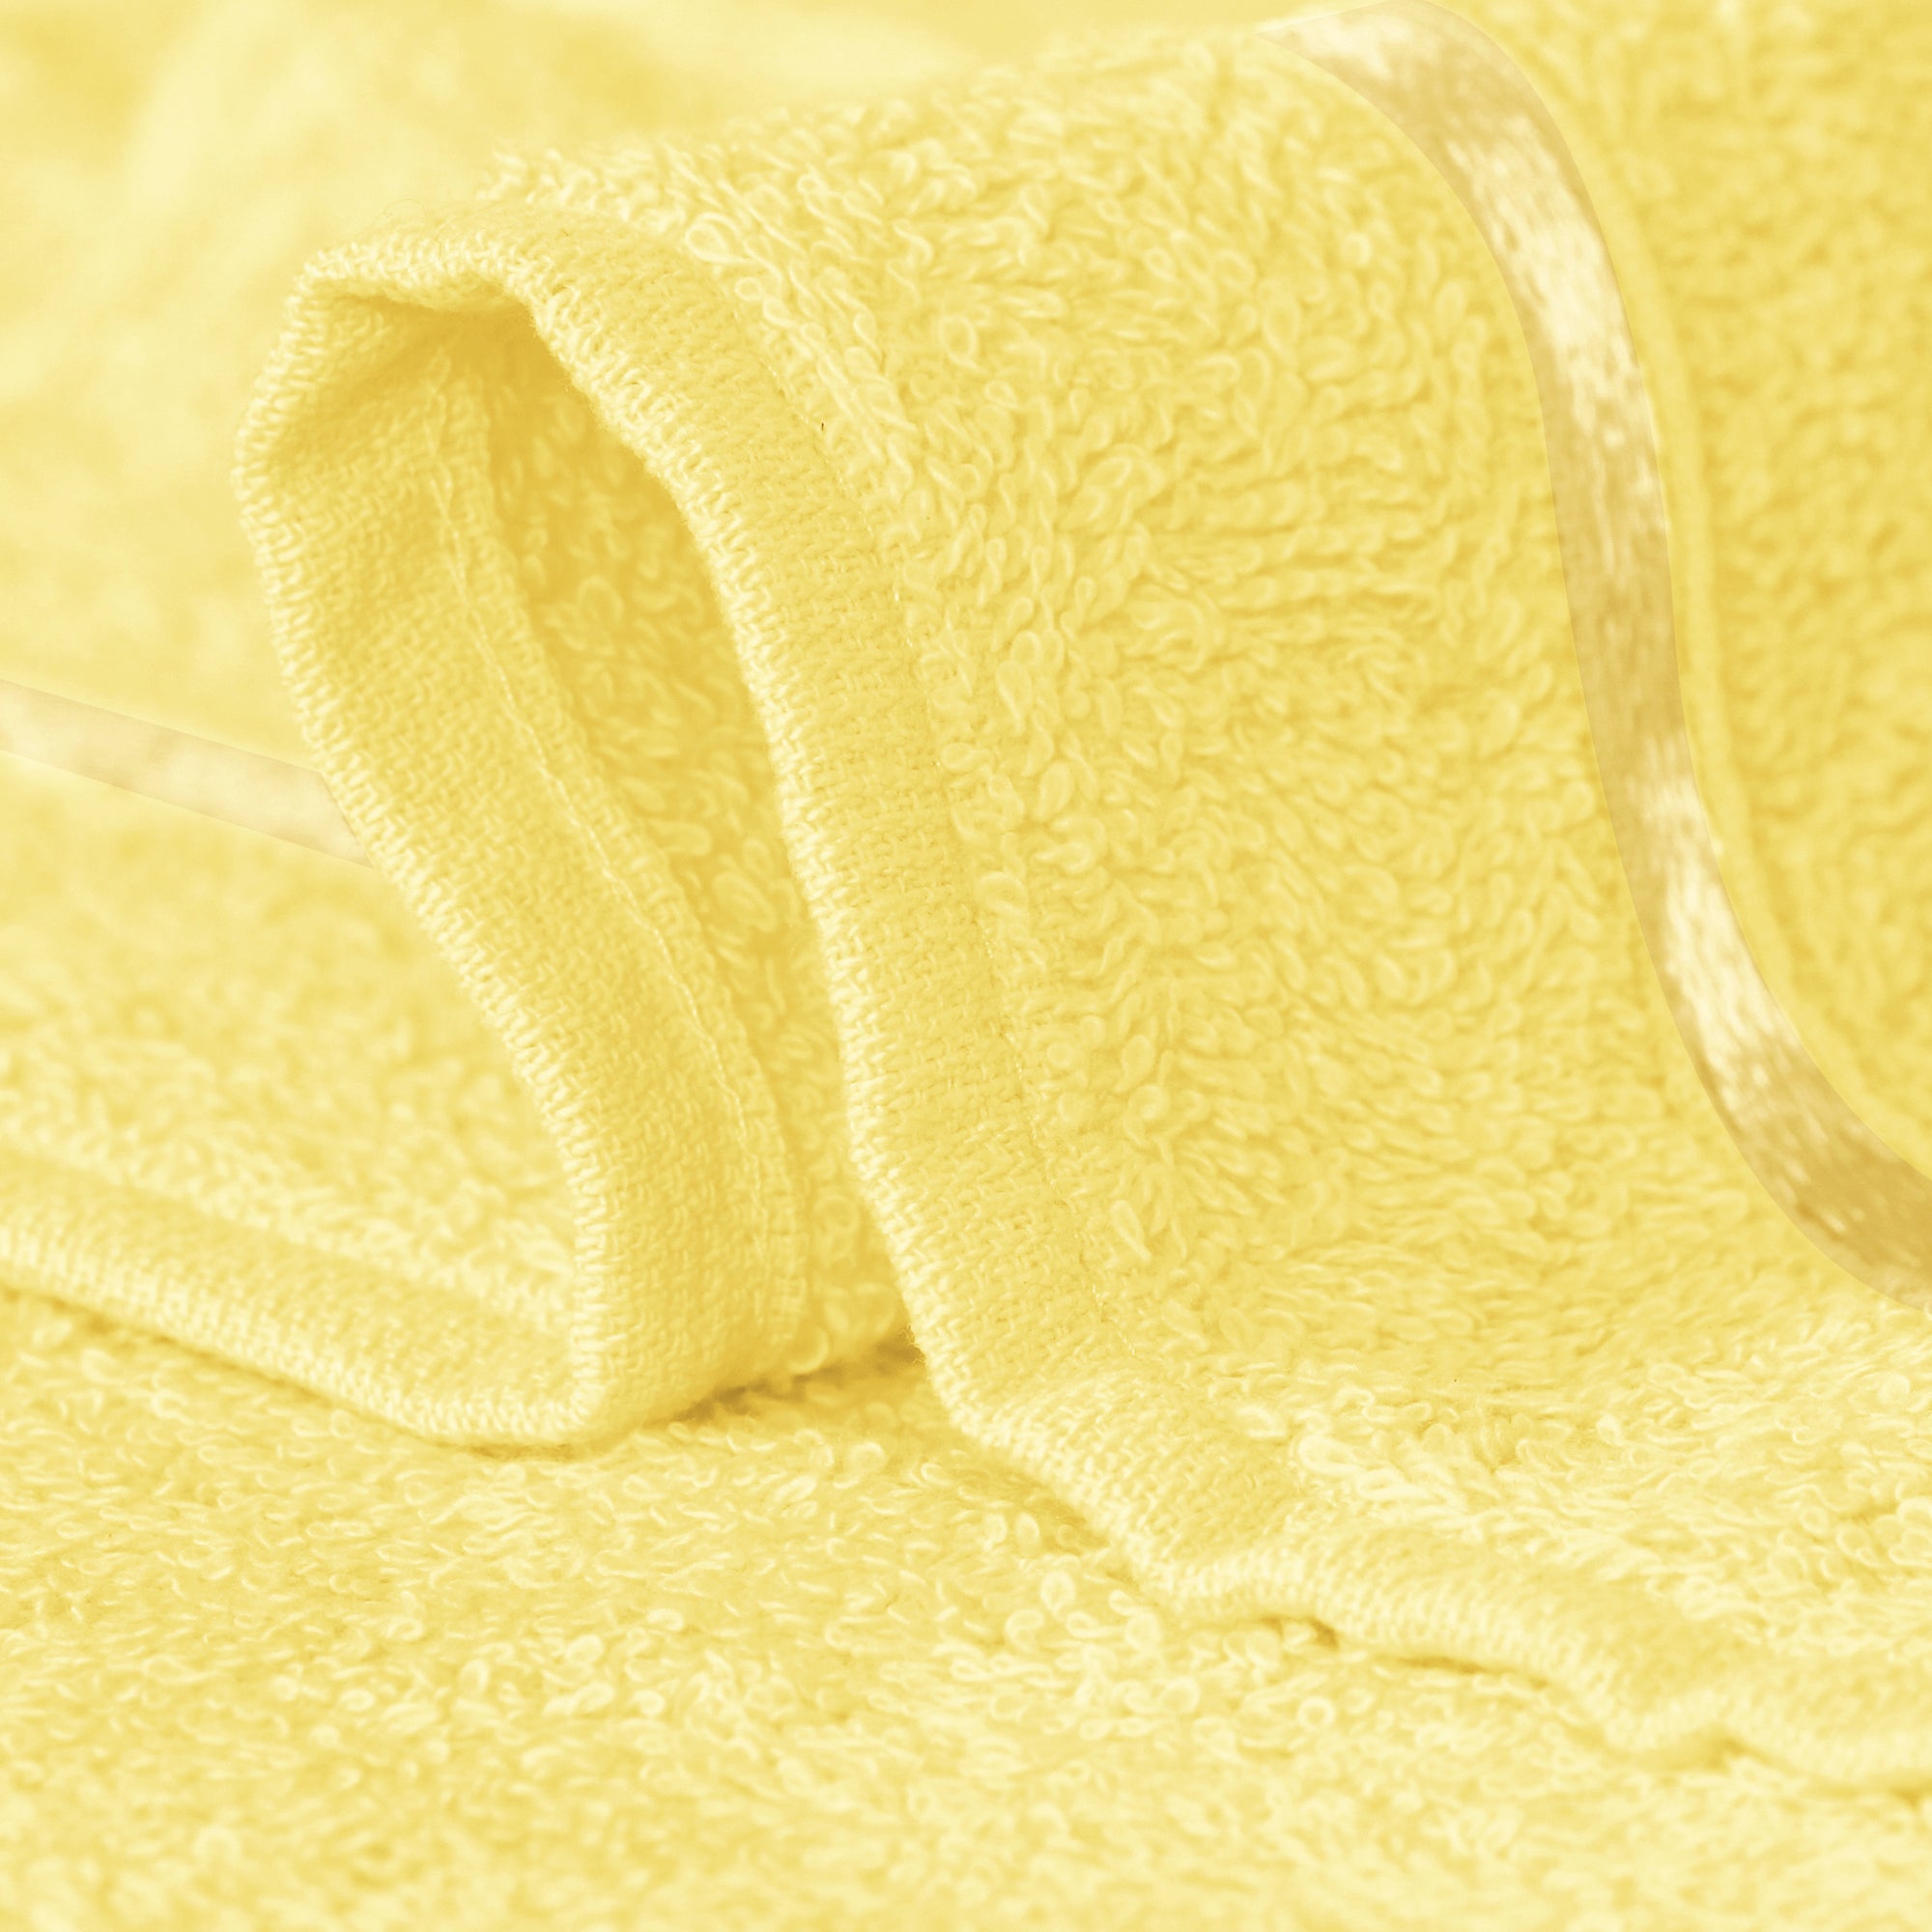 Story@Home 20 Units 100% Cotton Face Towels - Lemon Yellow